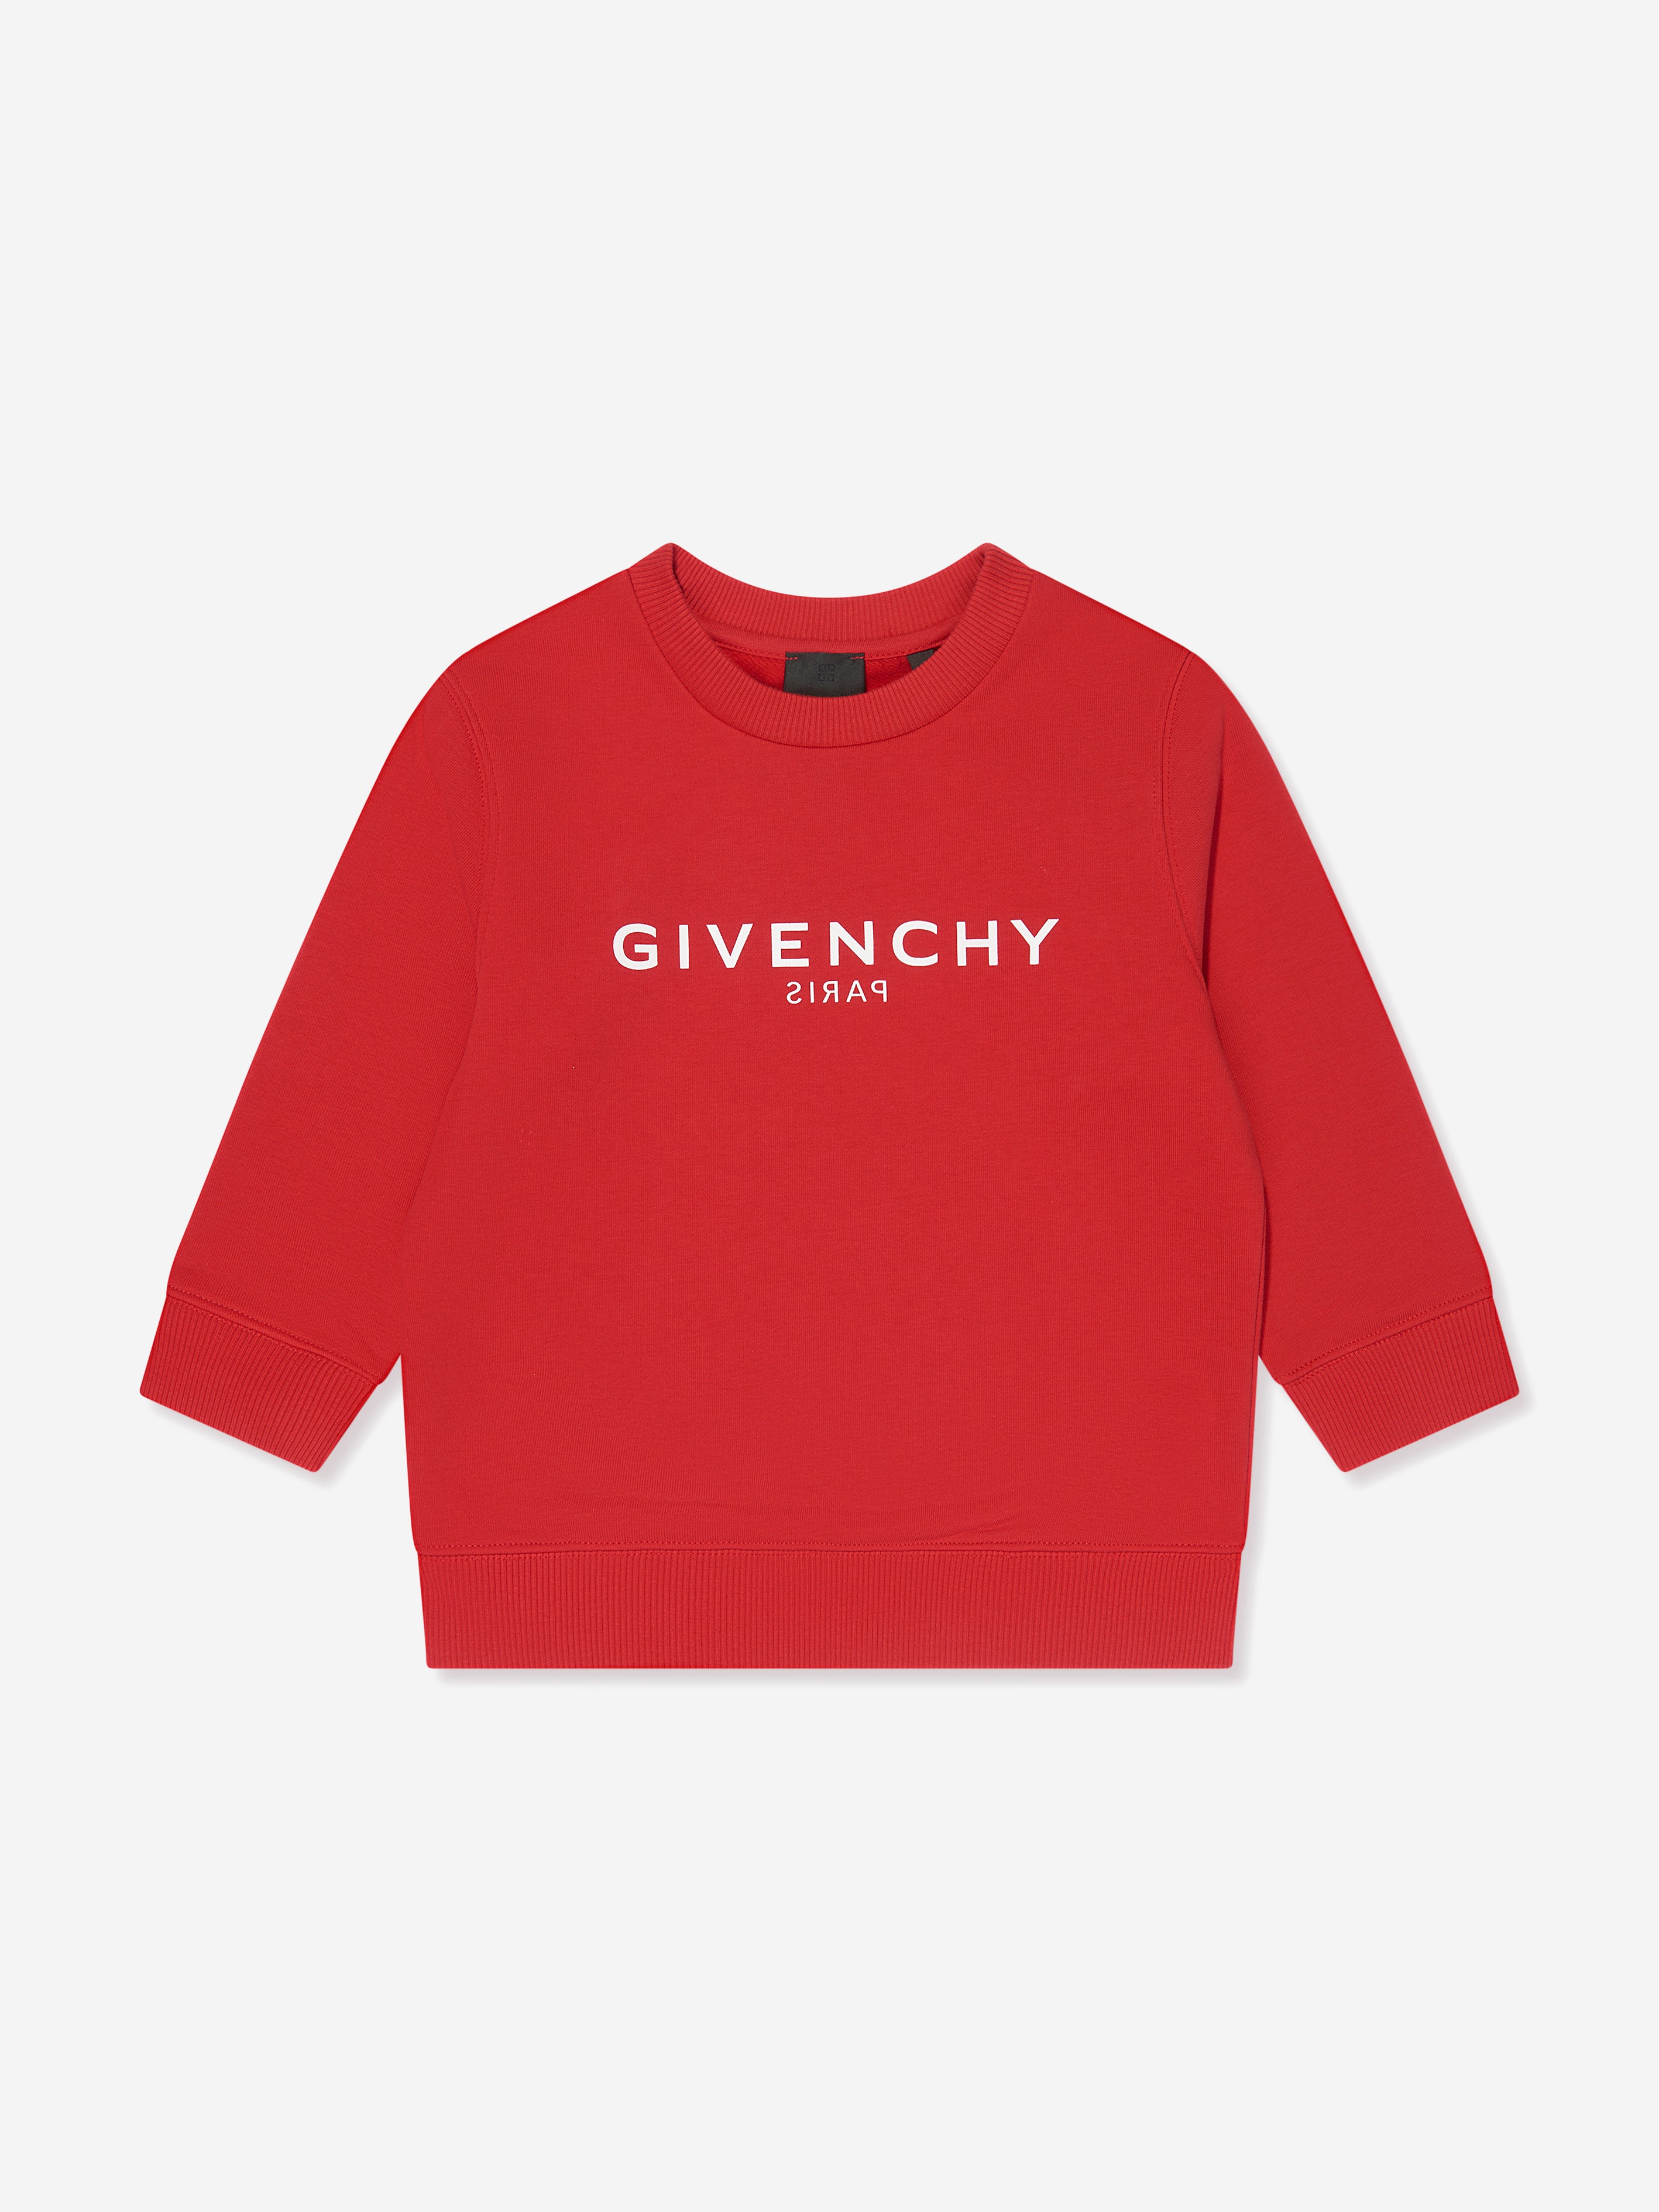 Givenchy Sweatshirt Men/ Unisex, (Black/ Red/ White), NWT, XXL. $995